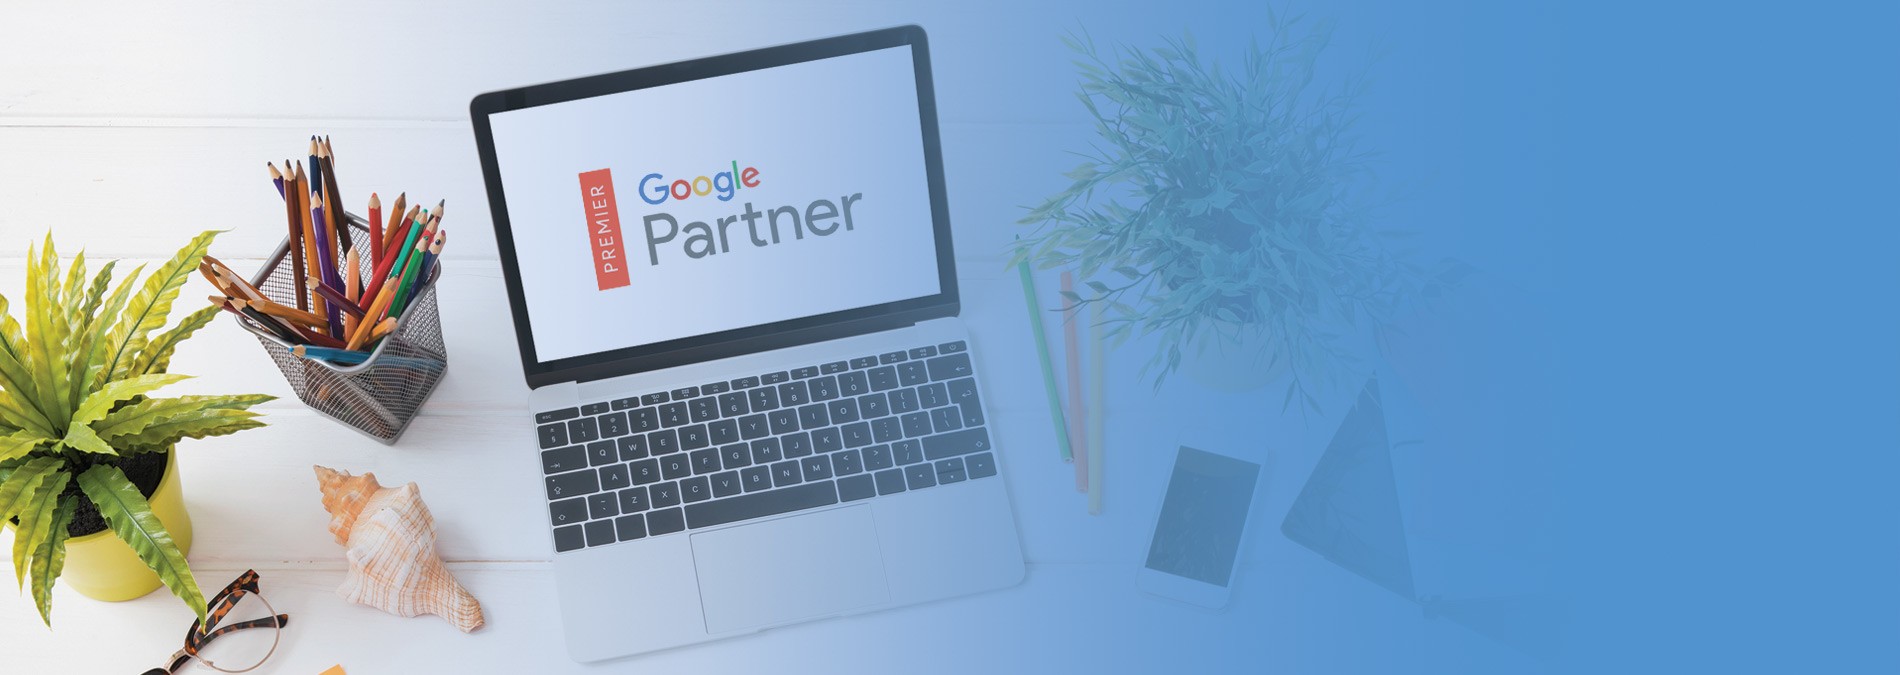 premium google partners logo banner